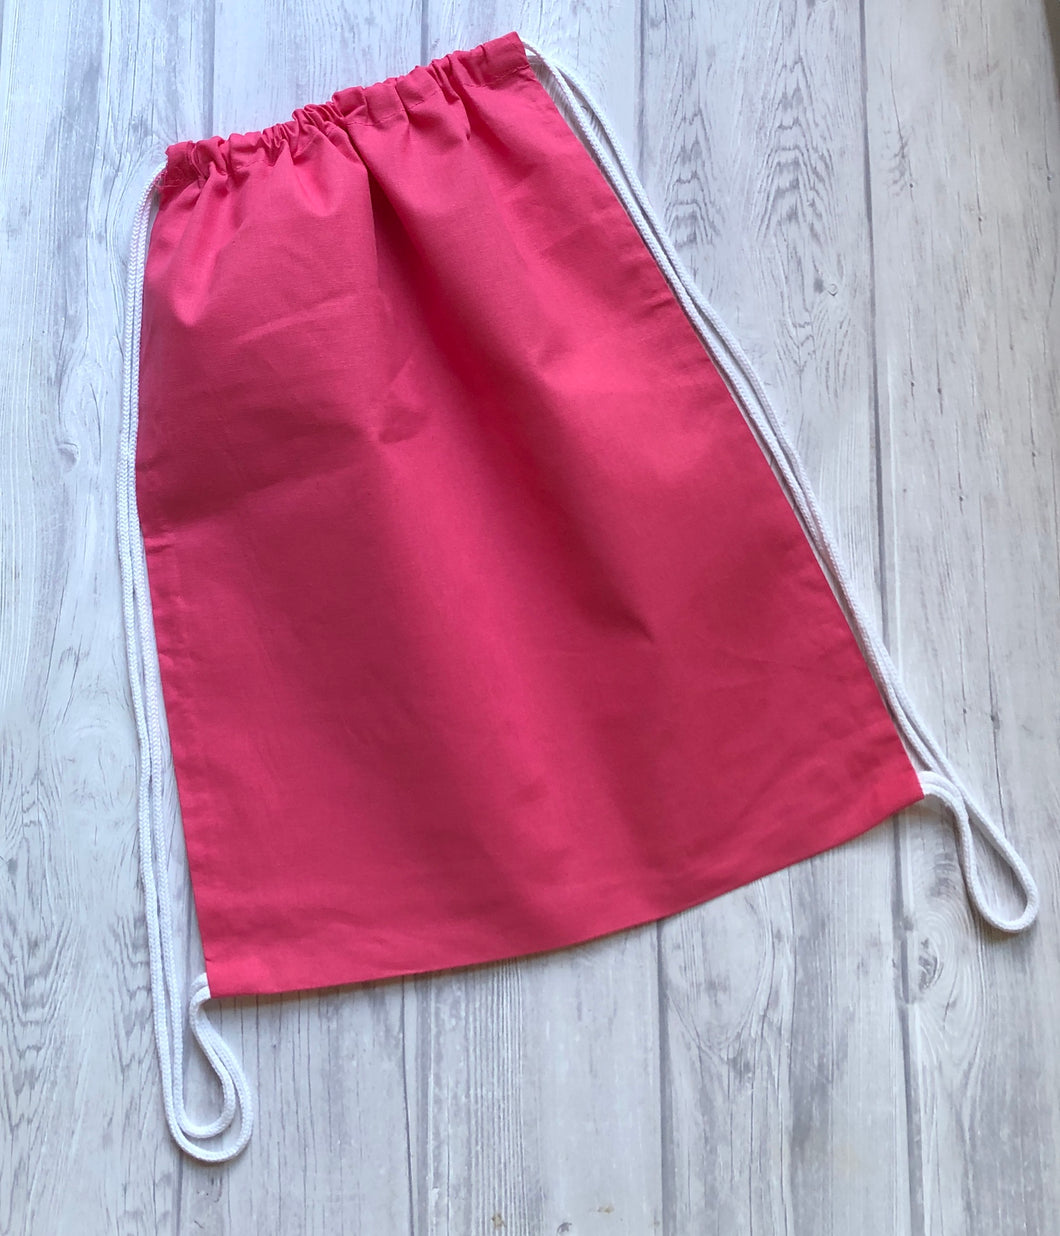 Cotton Drawstring Backpack - Pink